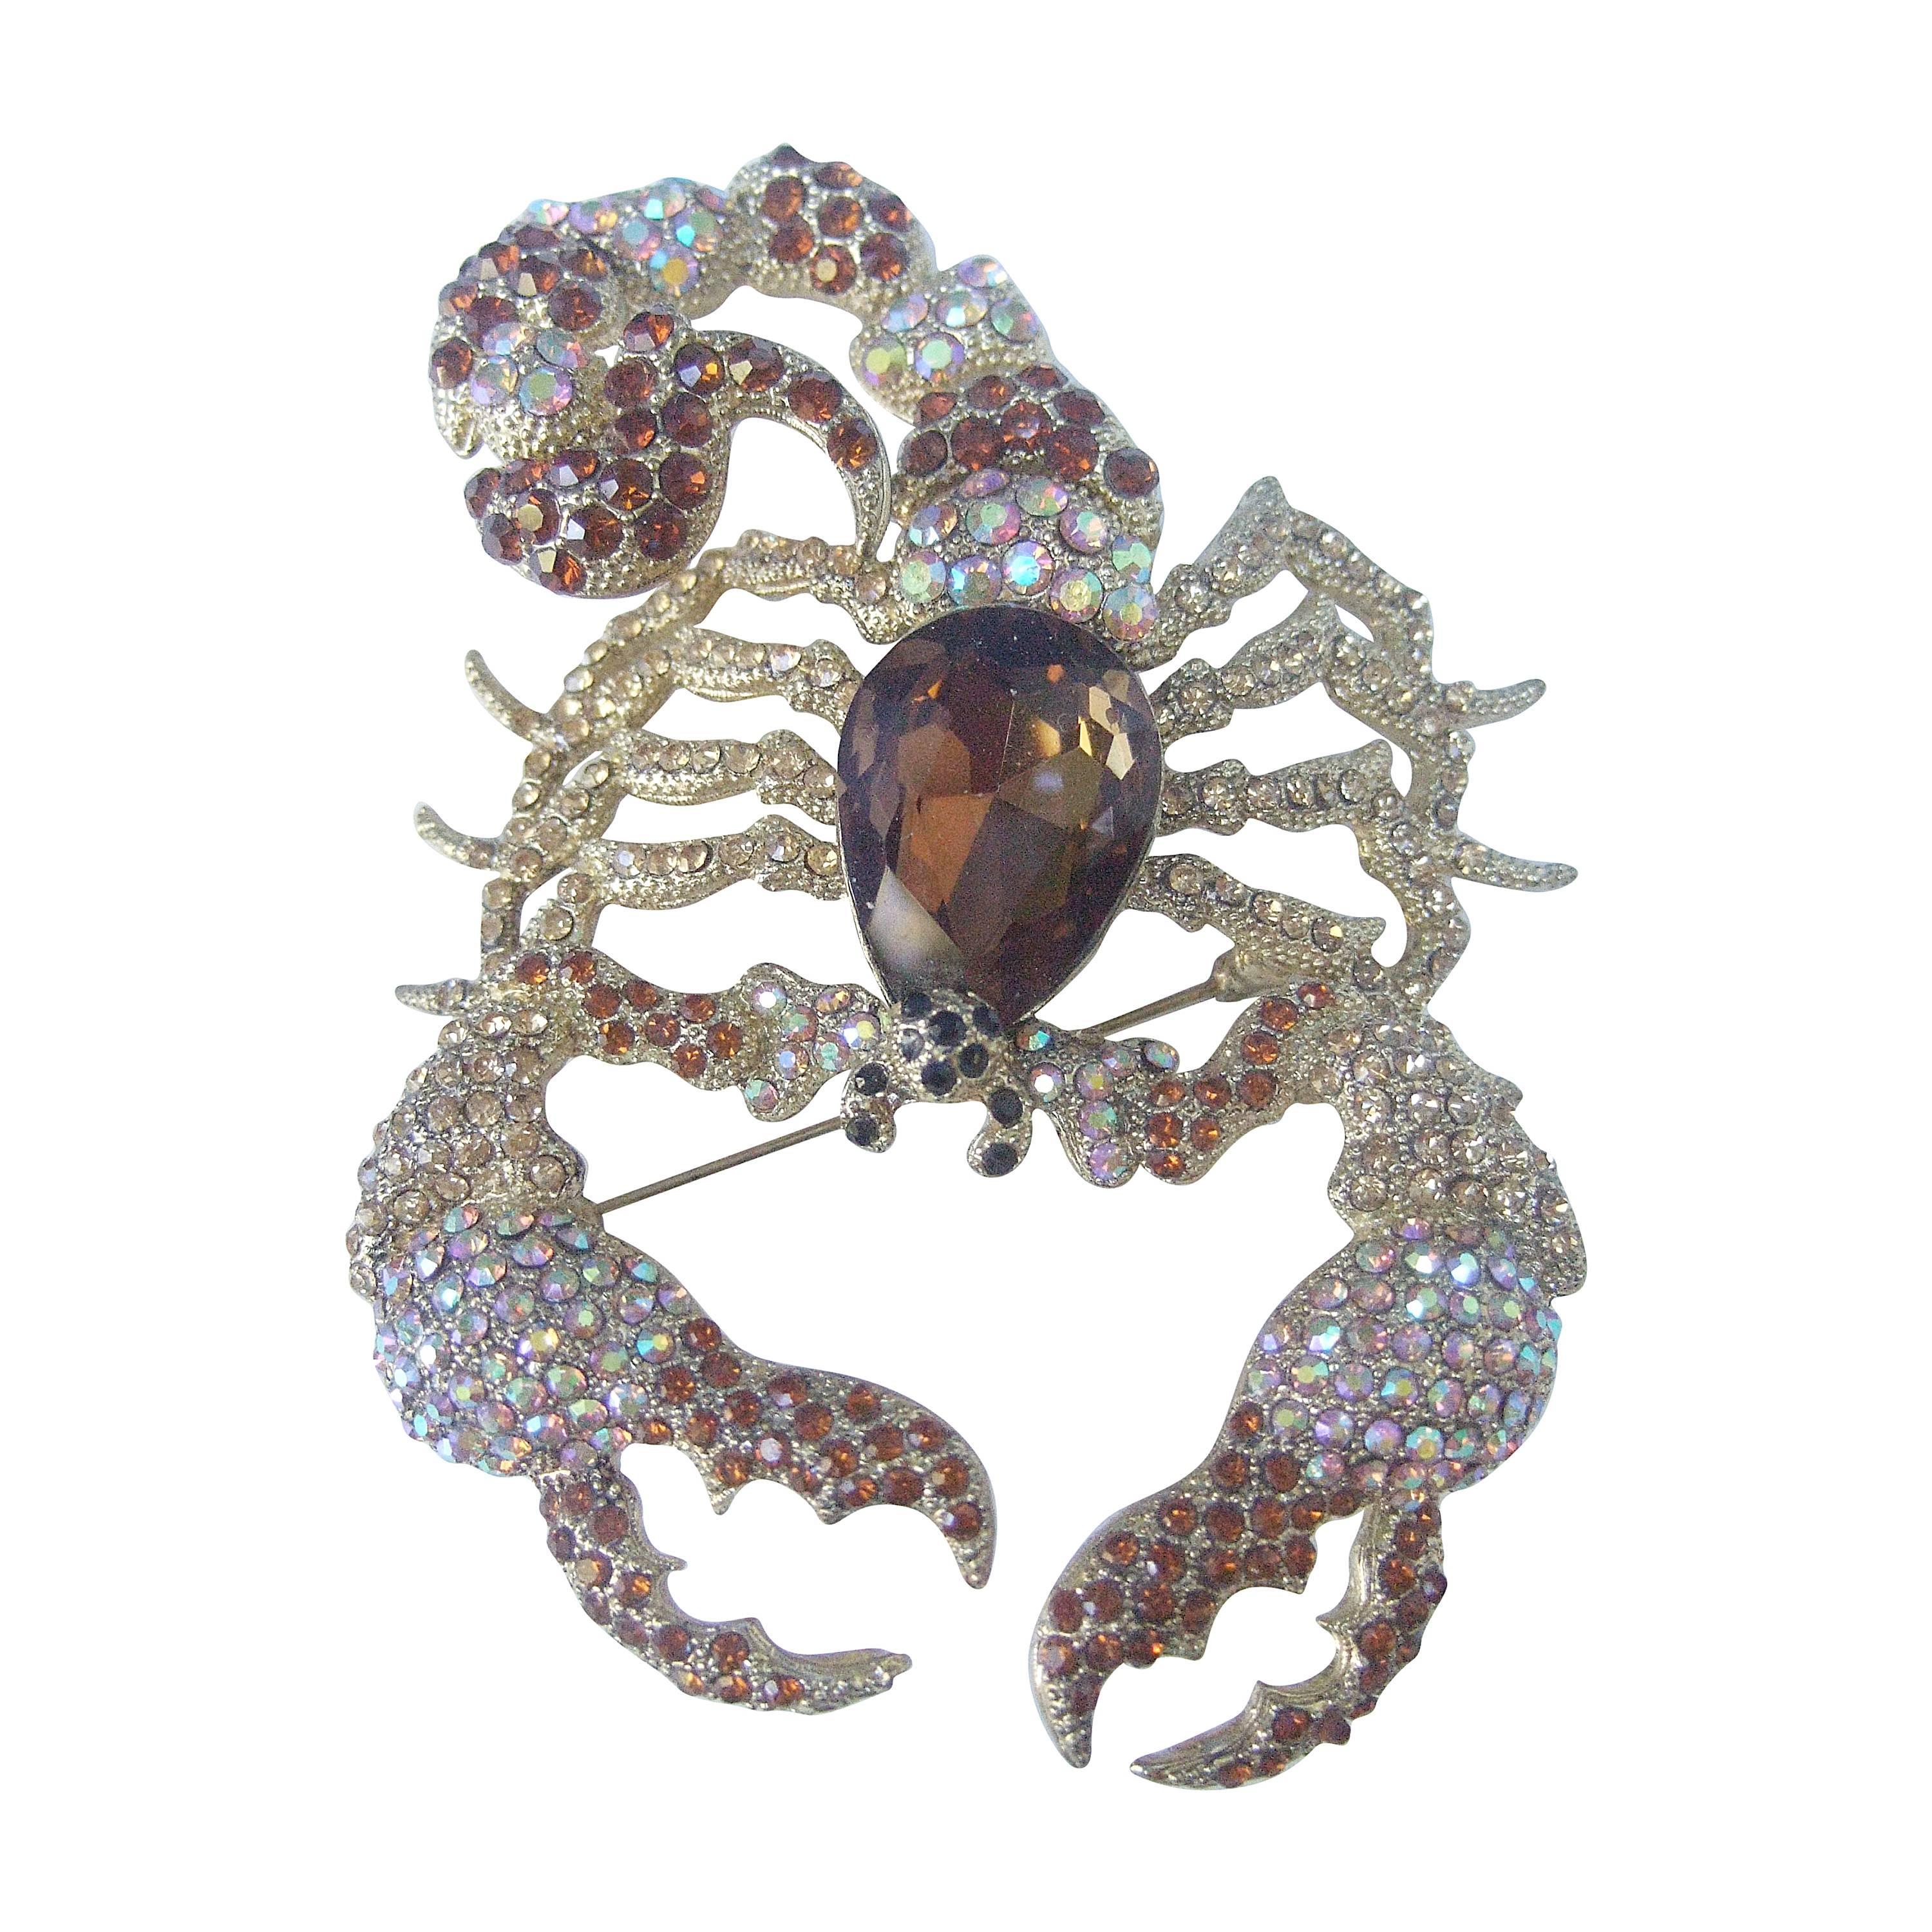 Massive Glittering Crystal Scorpion Brooch